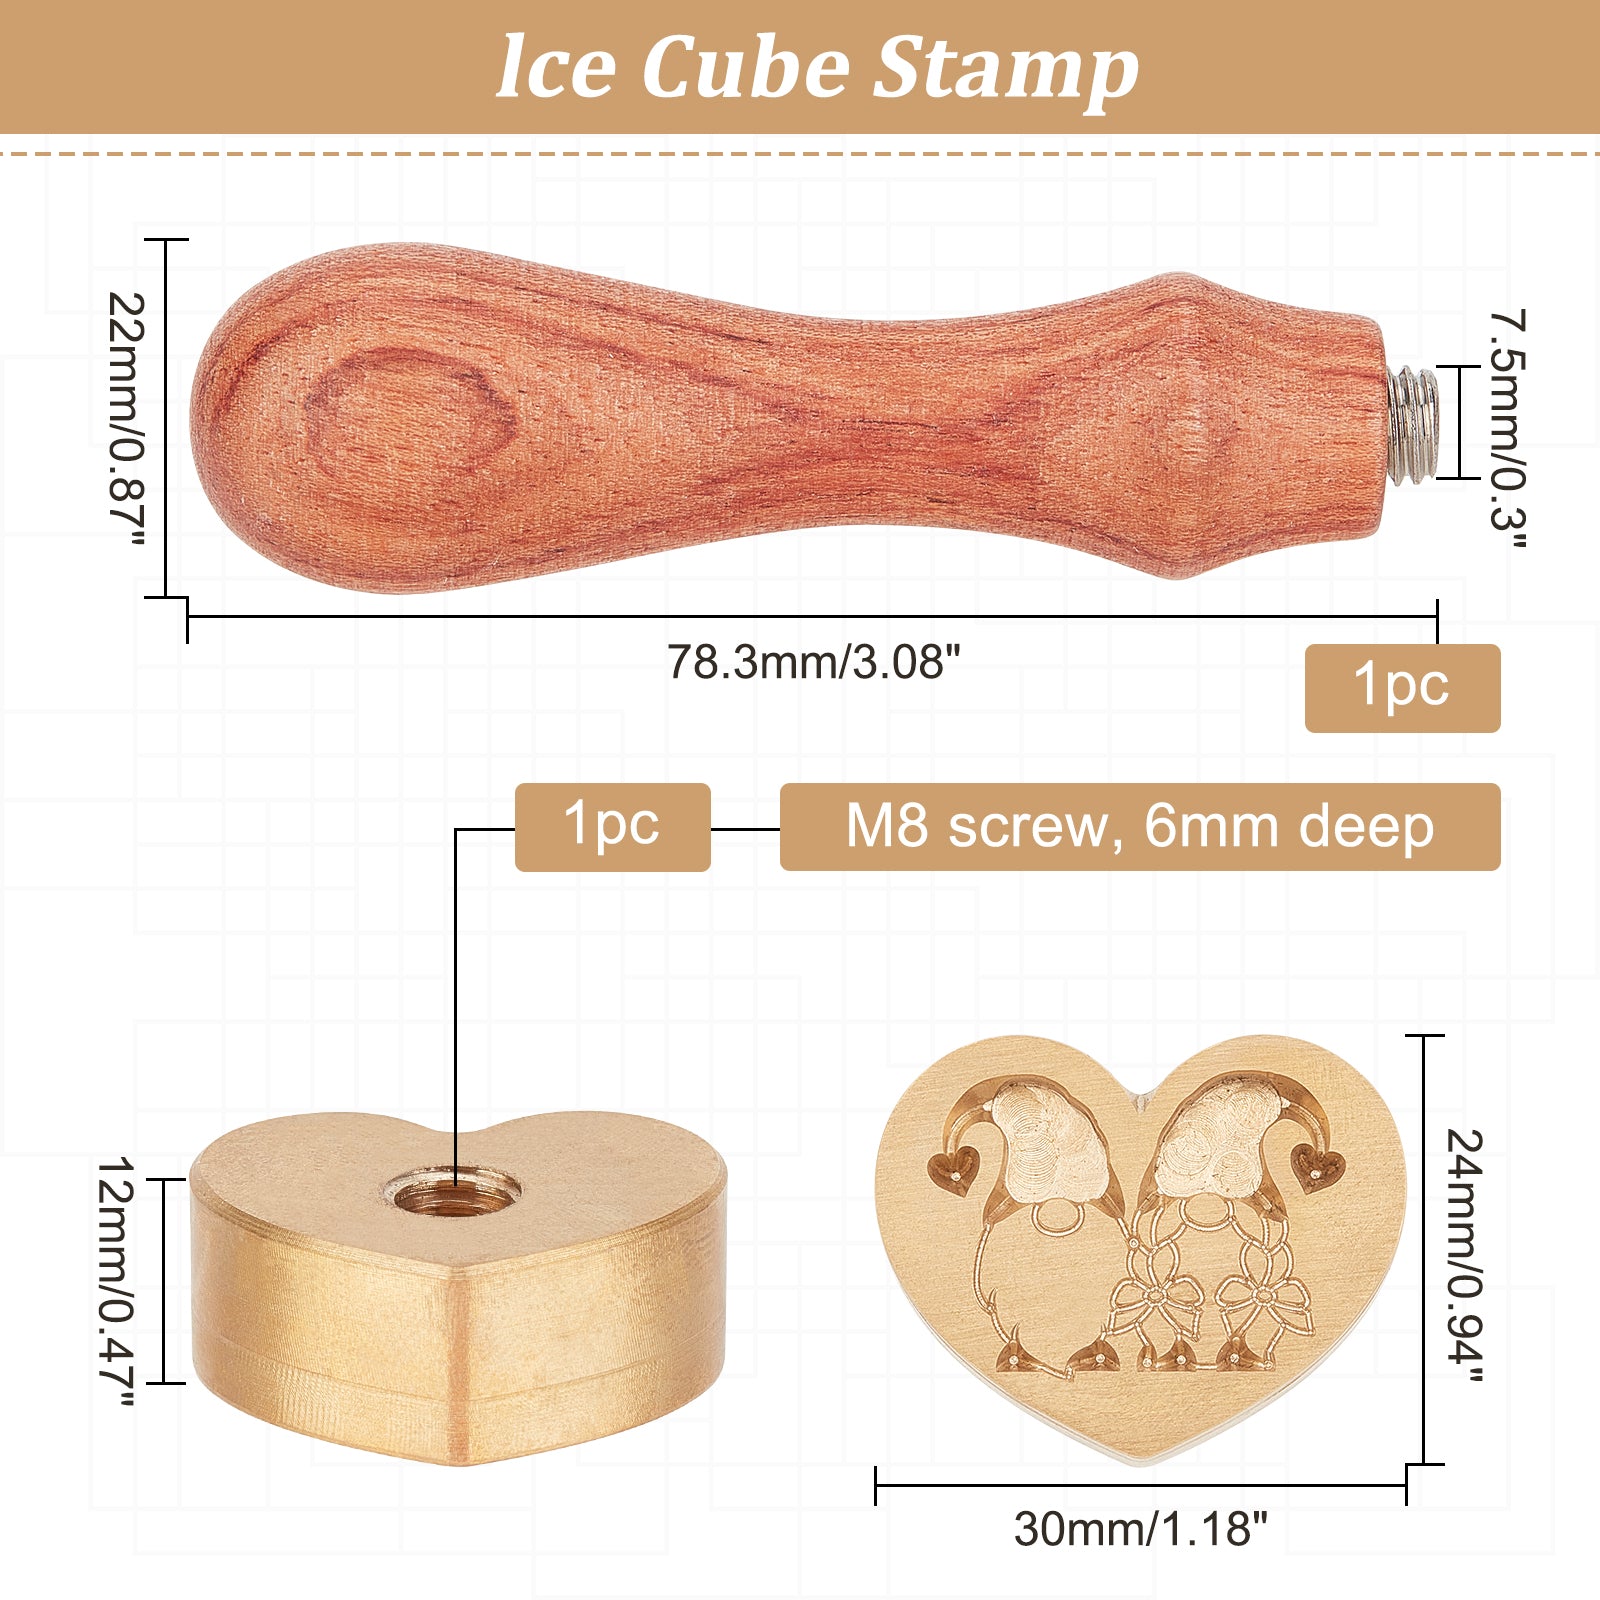 CRASPIRE Rabbit Ice Stamp Wood Handle Wax Seal Stamp